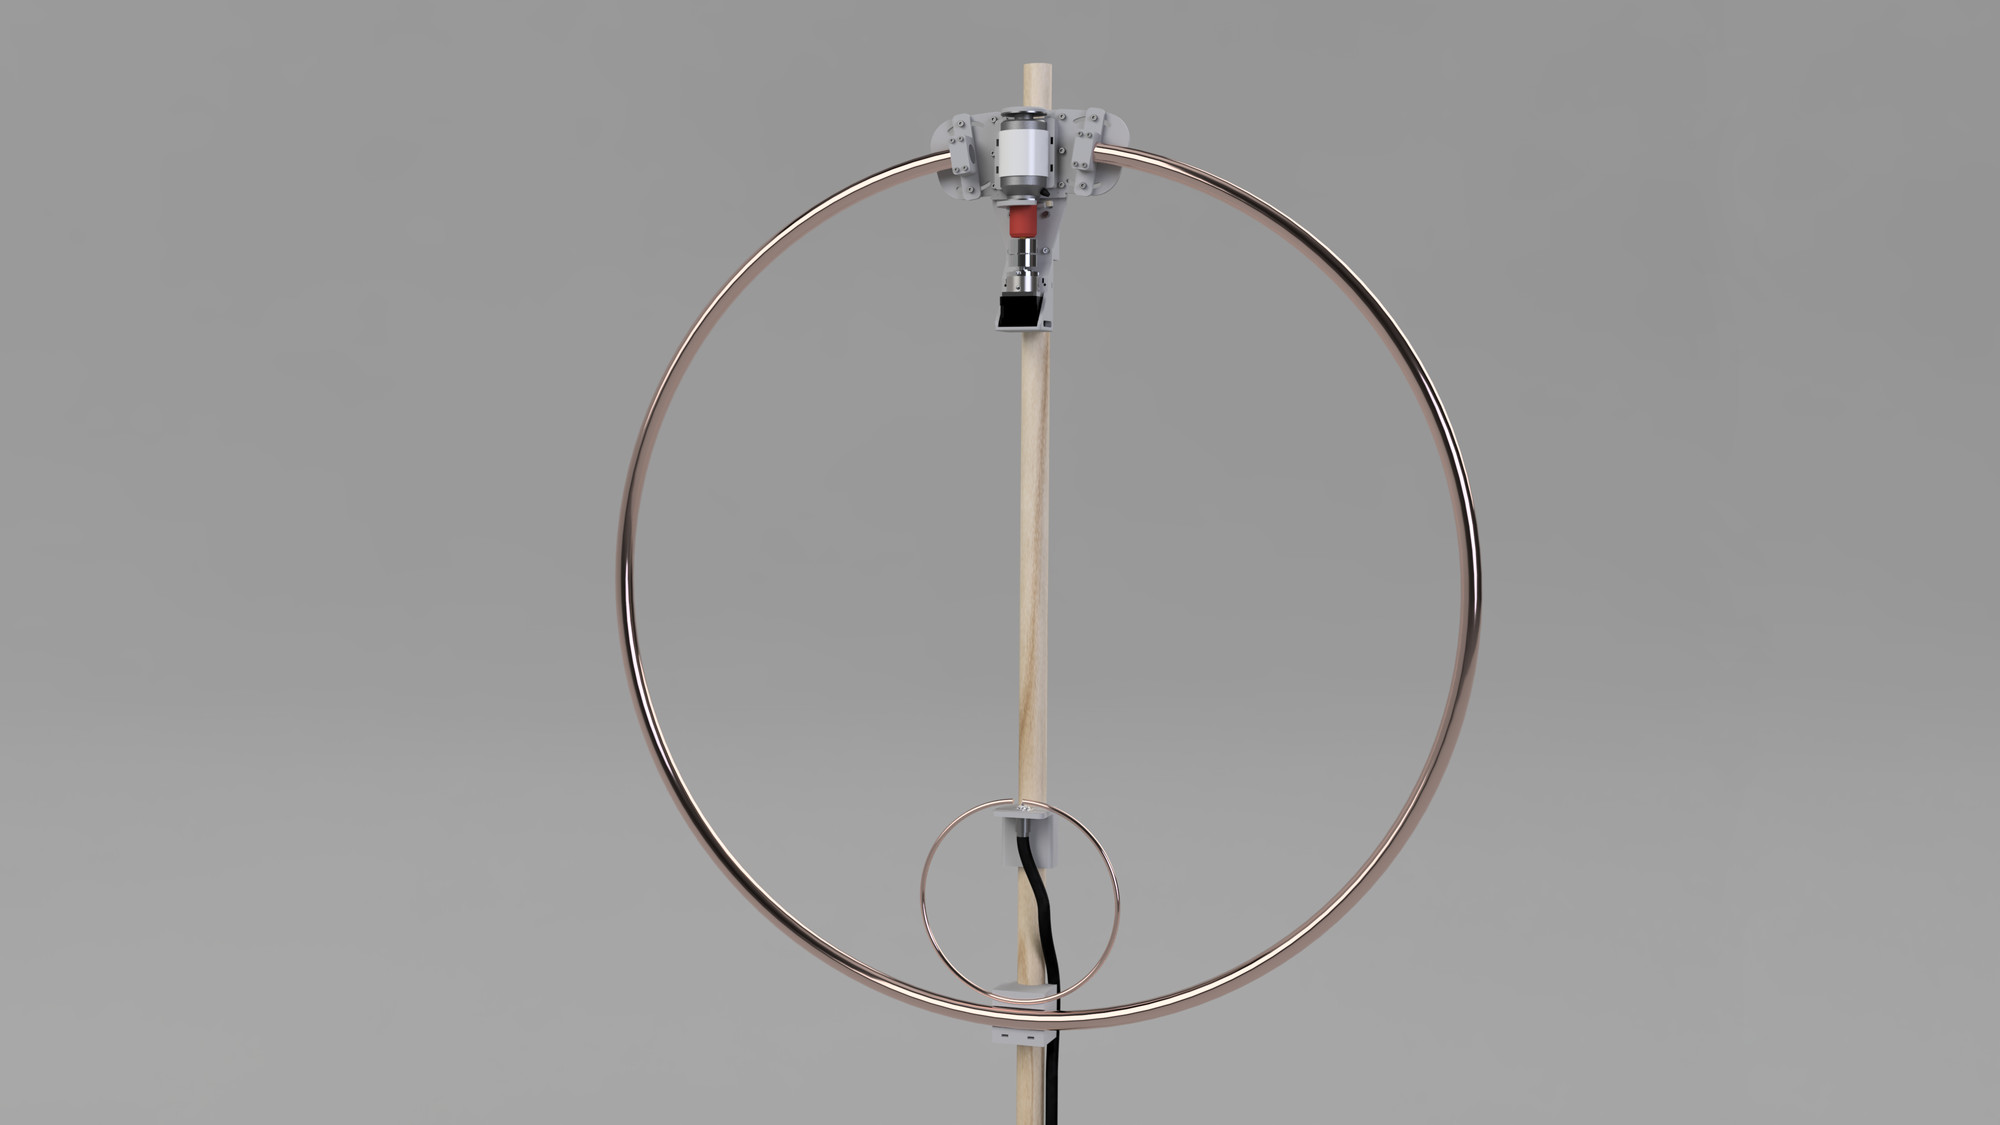 Eric Sorensen's Magnetic Loop Antenna